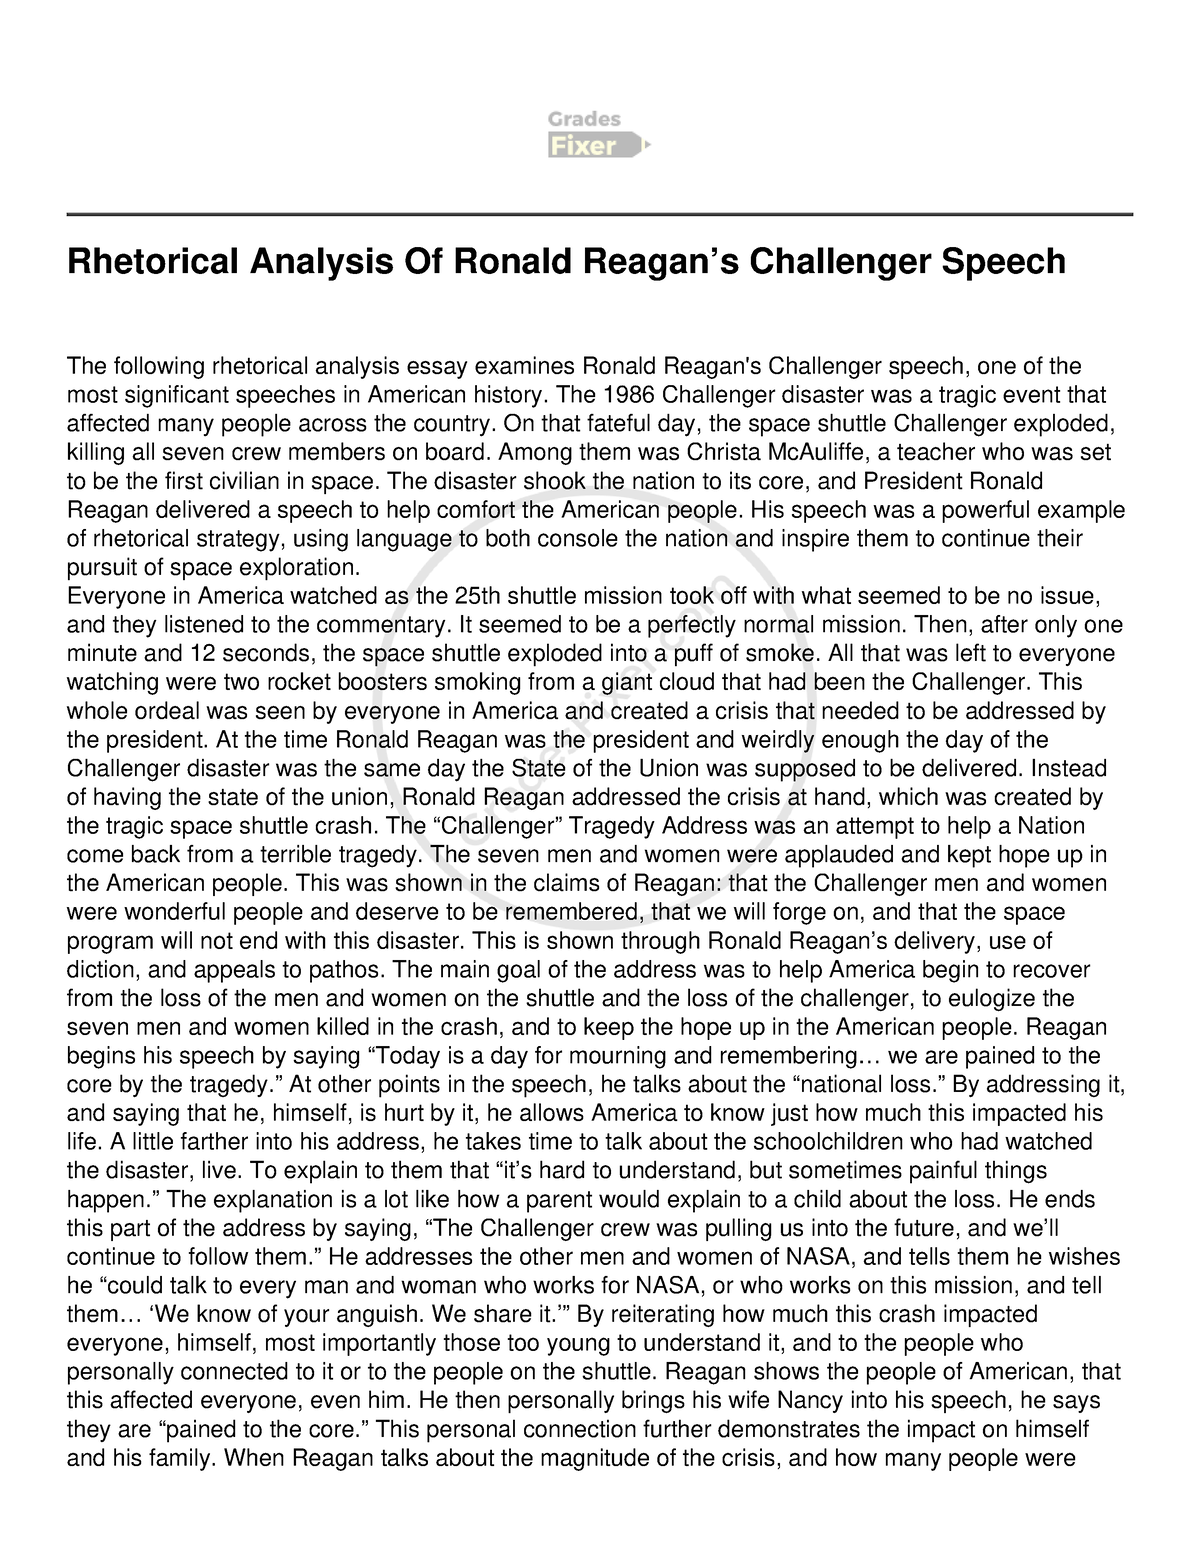 ronald reagan rhetorical analysis essay